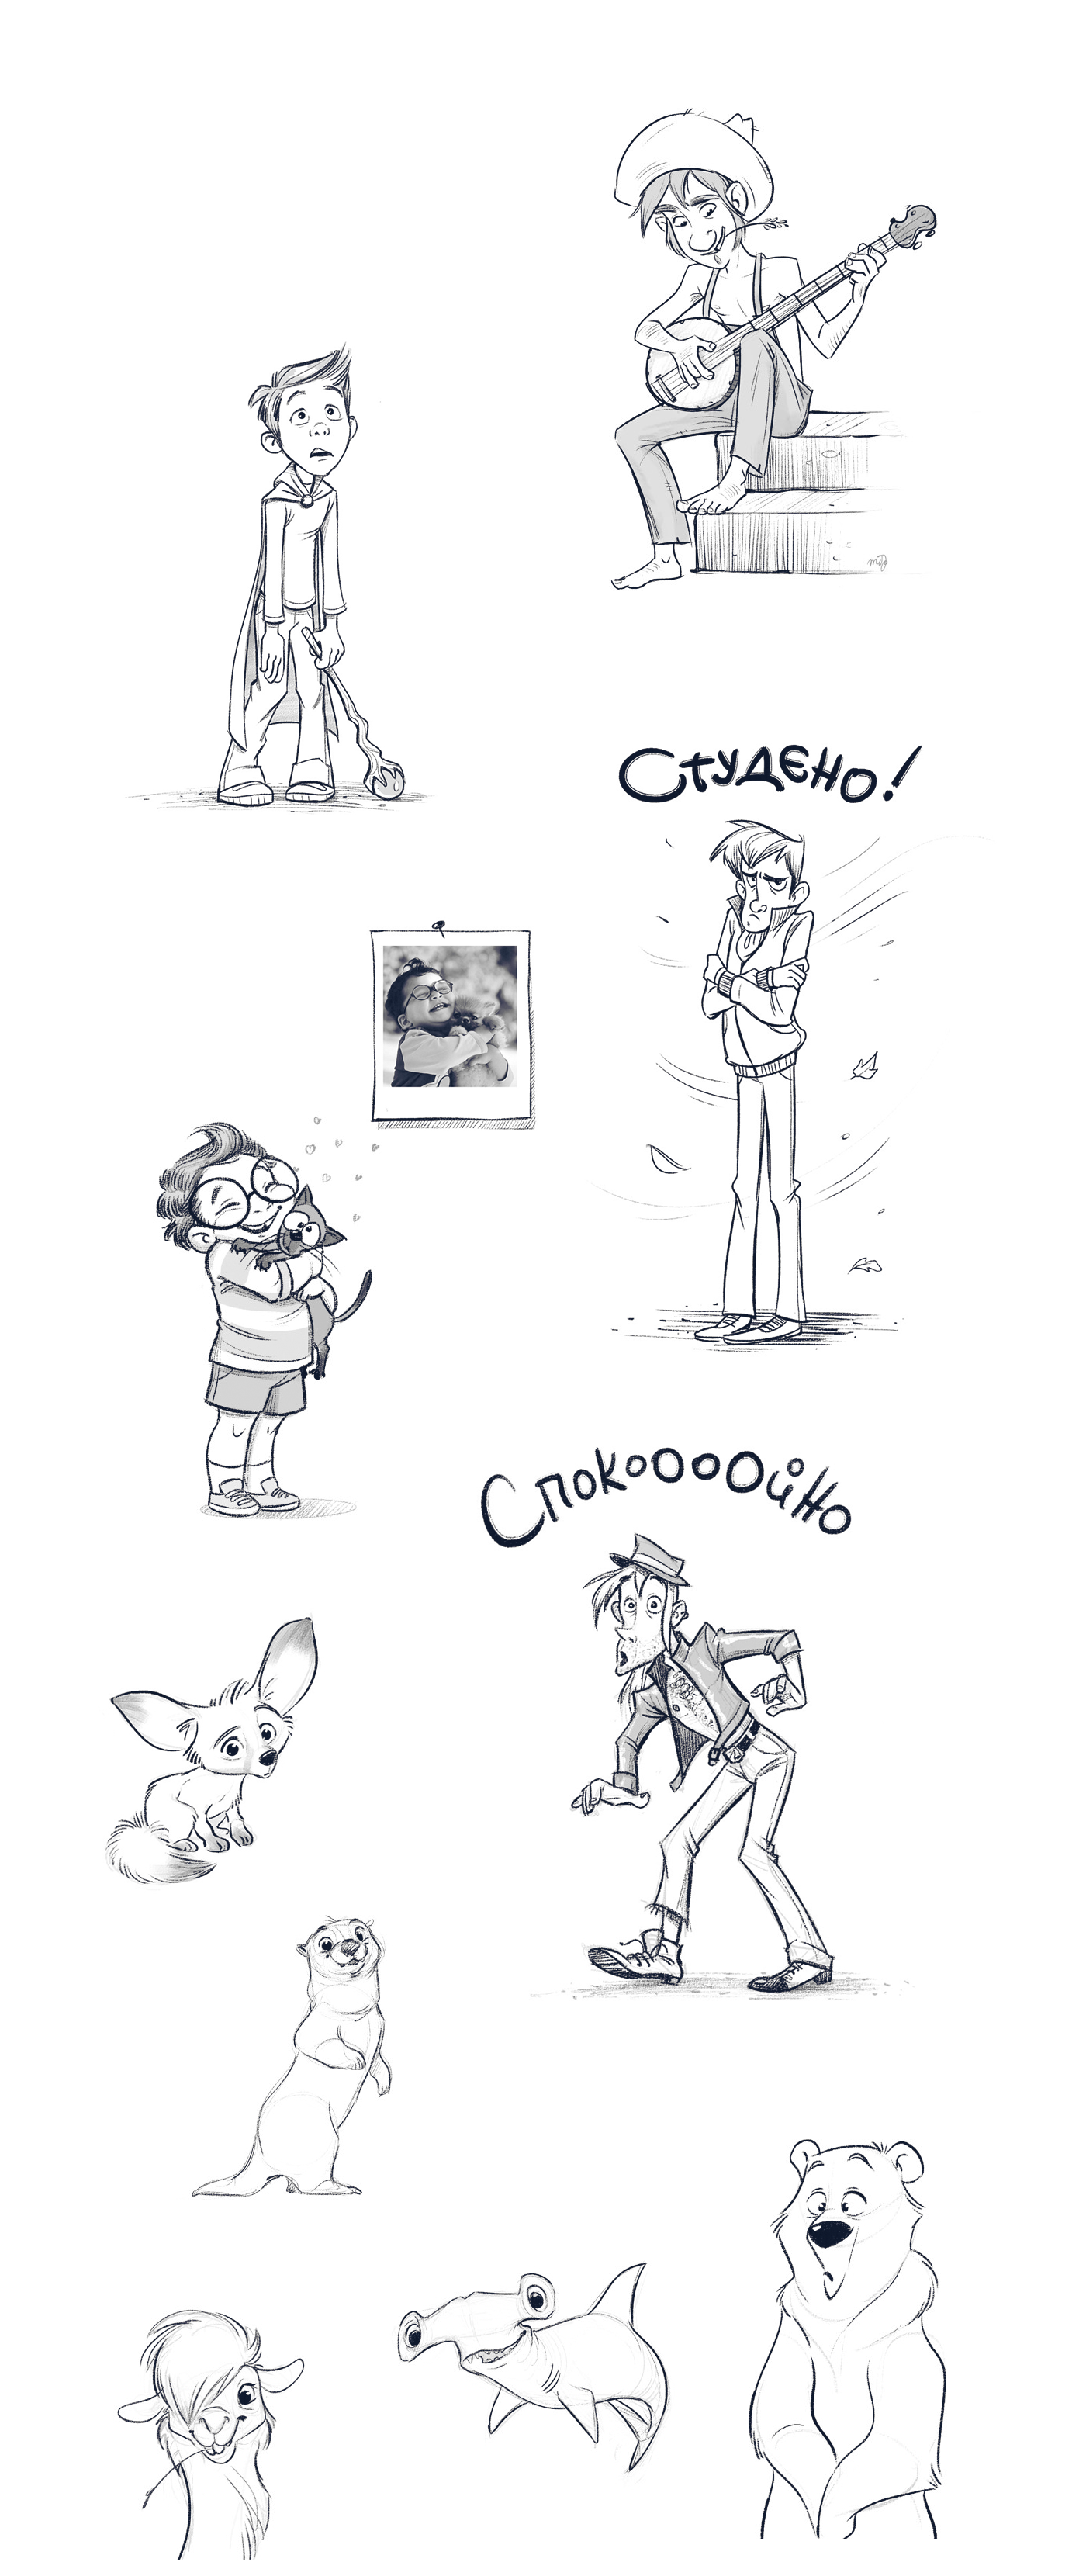 Character characterdesign kid Fun cartoon sketch process